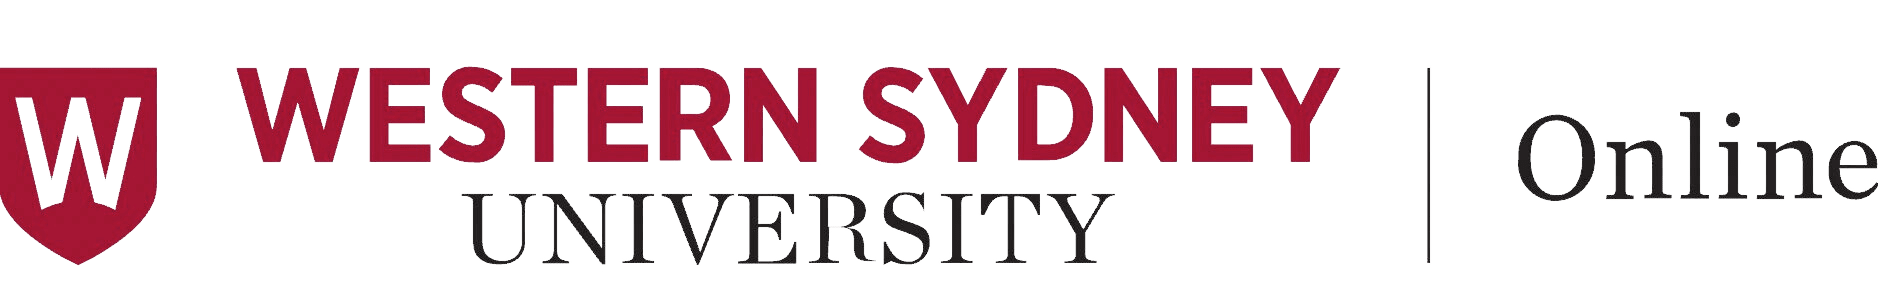 western australia university